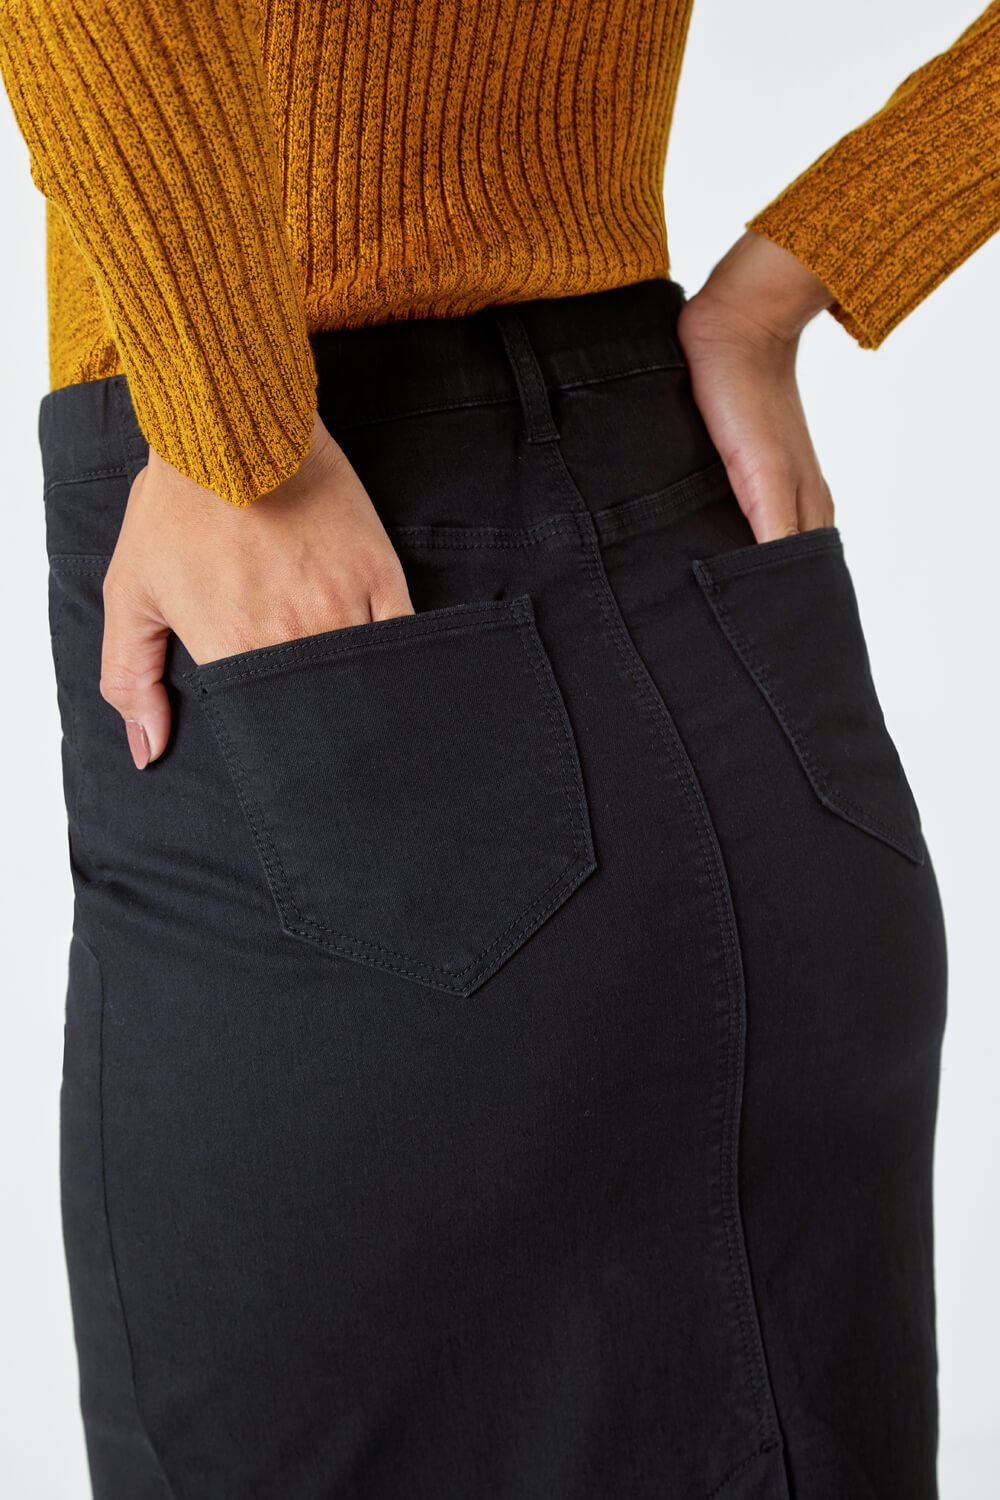 Black Cotton Denim Stretch Skirt, Image 5 of 5